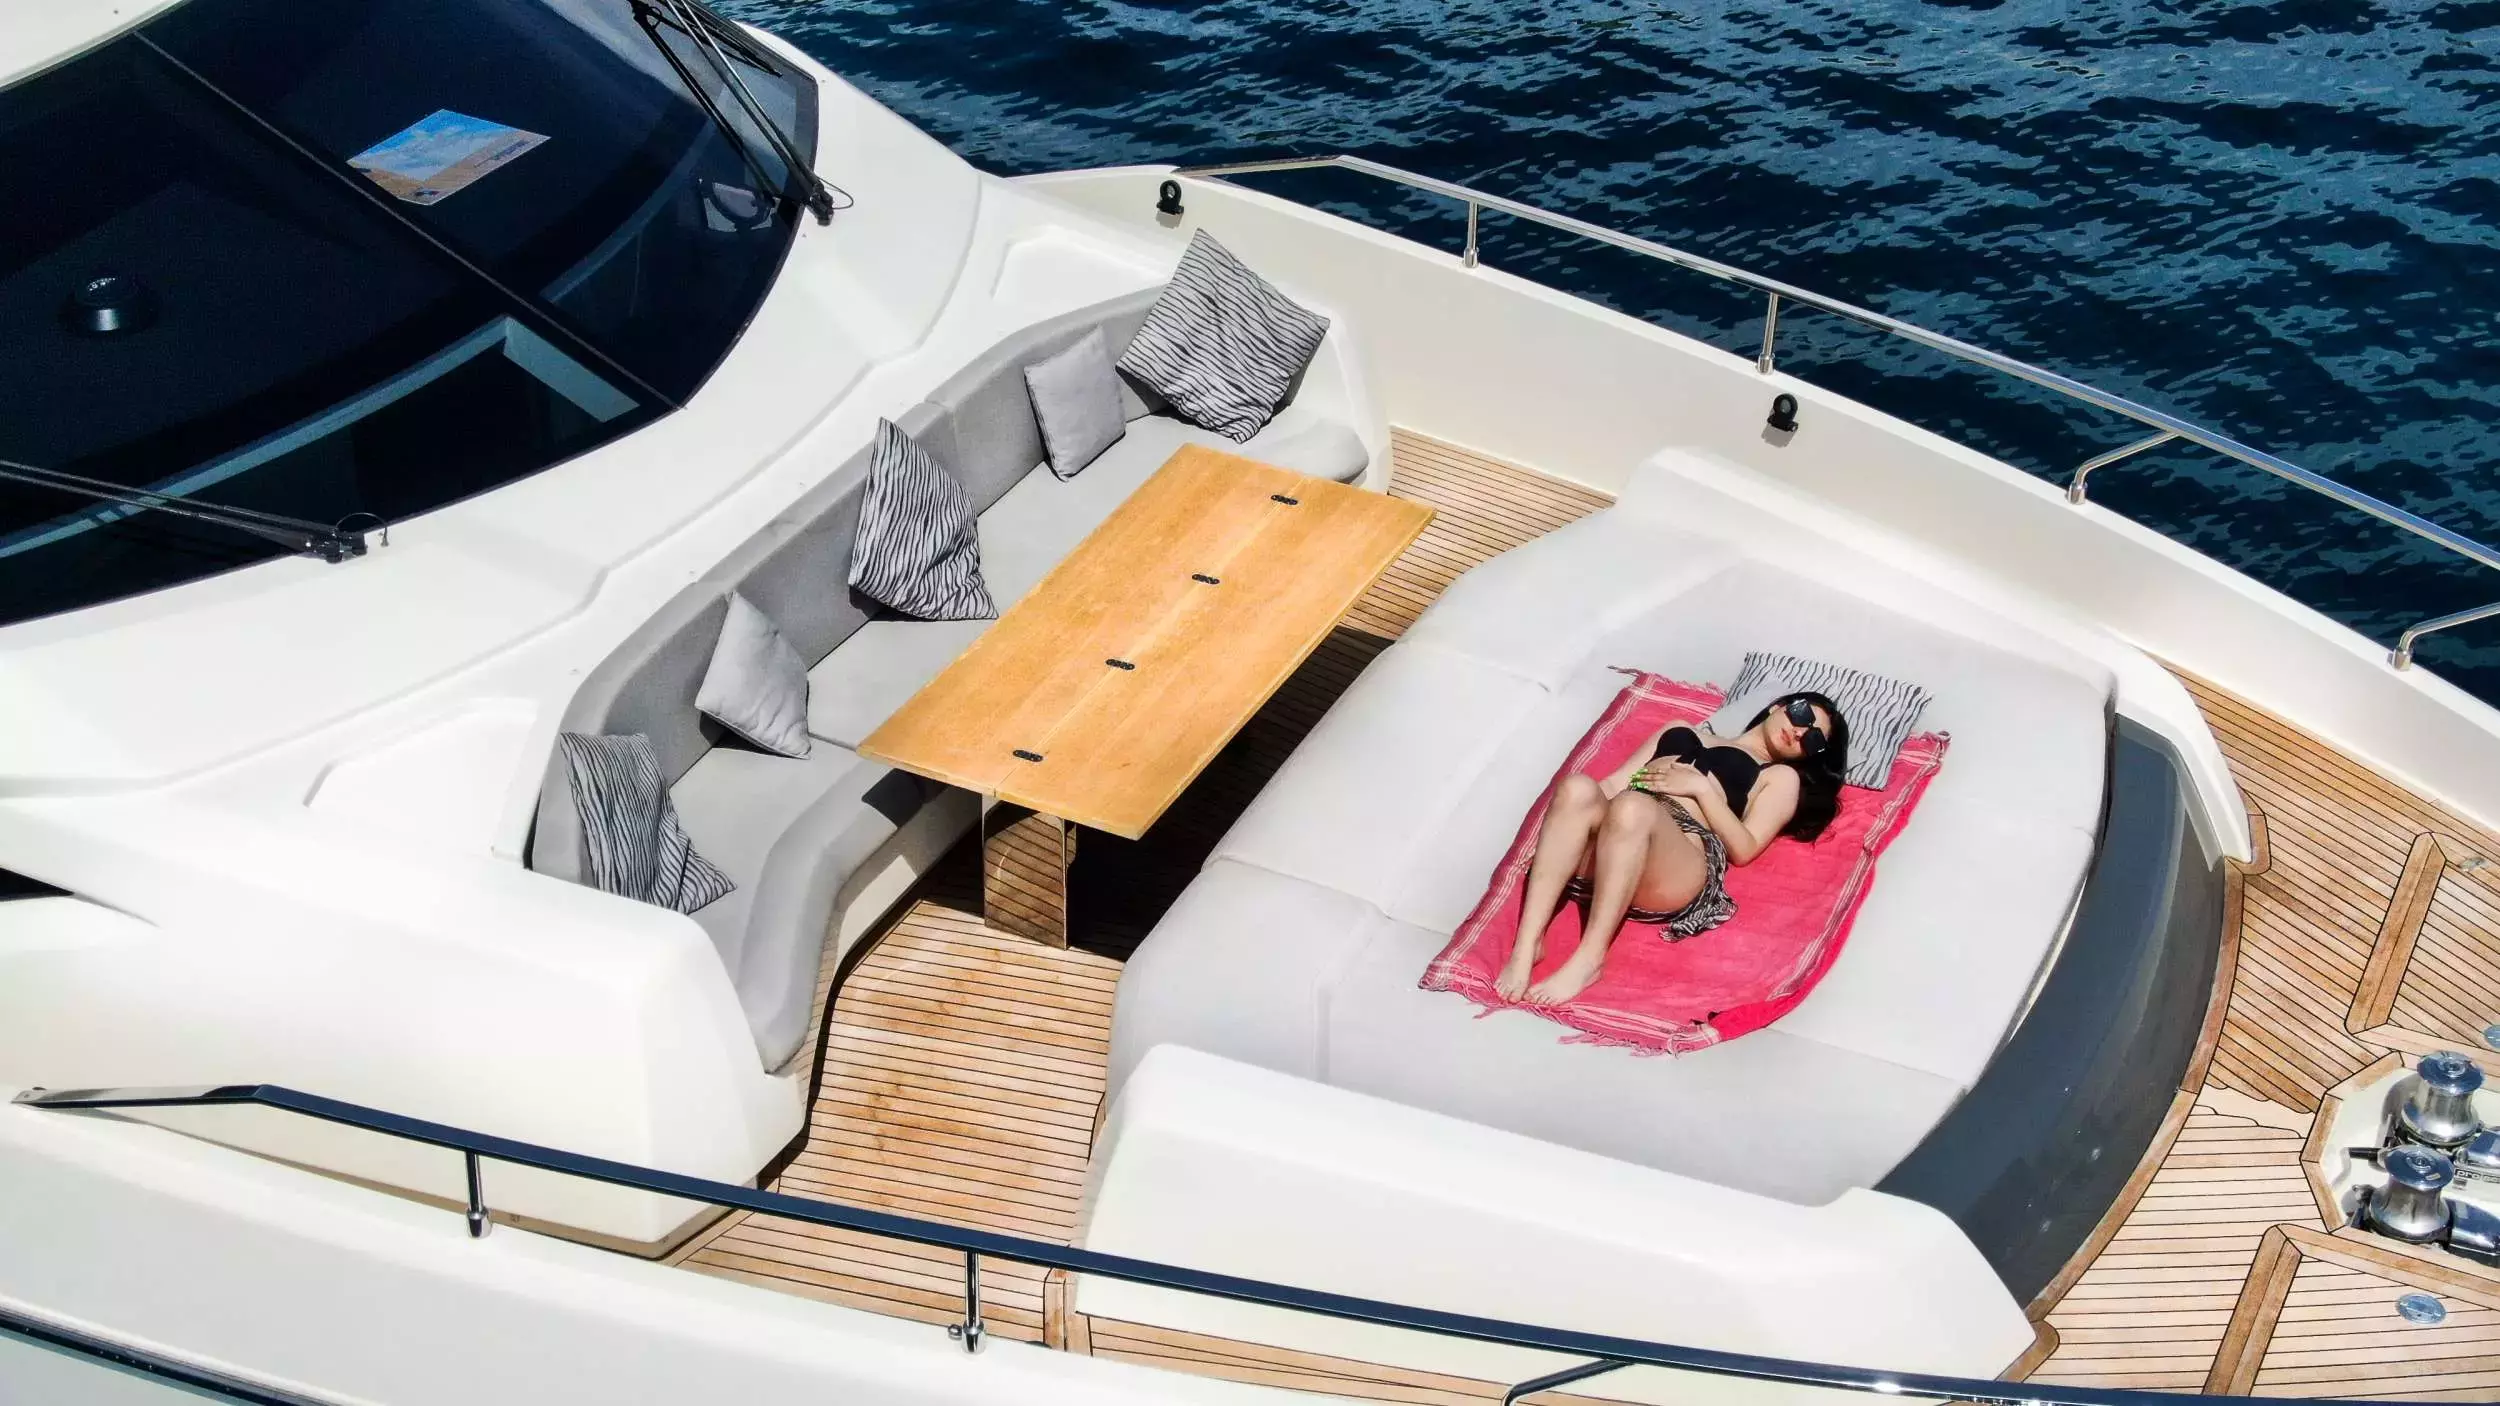 E3 by Ferretti - Special Offer for a private Motor Yacht Charter in La Spezia with a crew